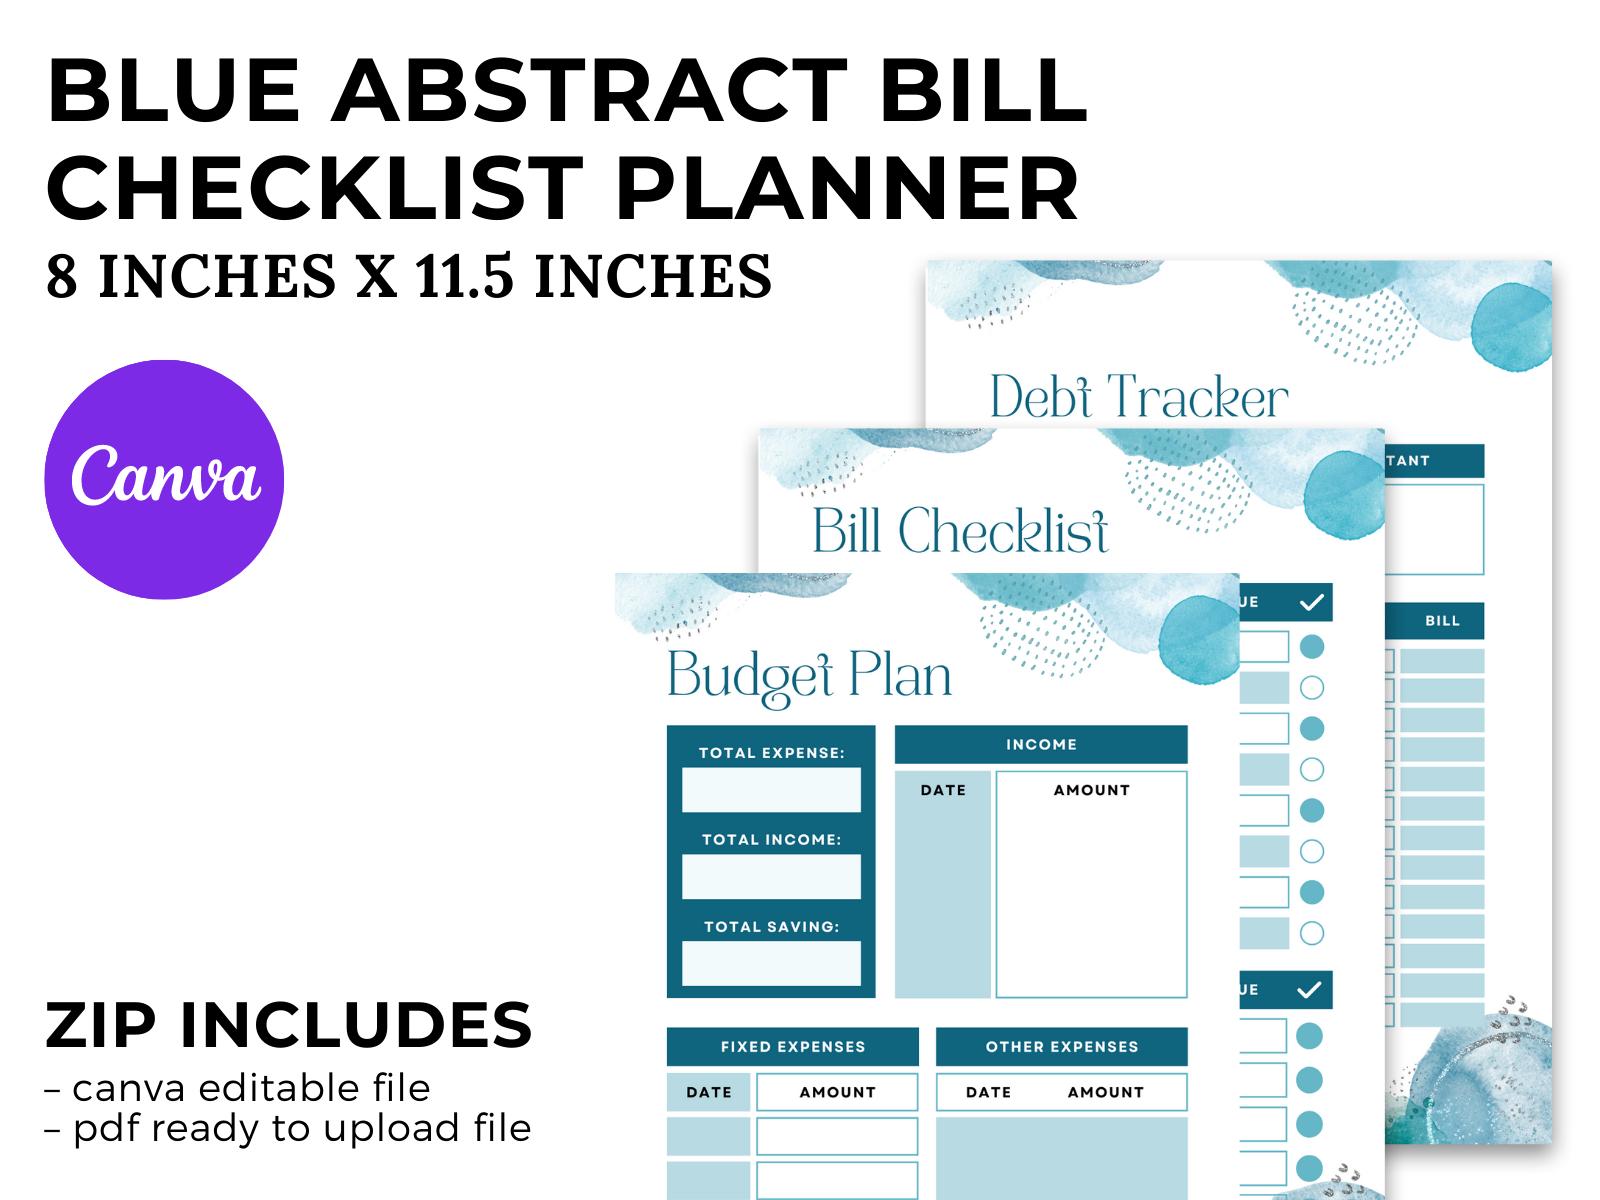 Blue Abstract Bill Checklist Planner